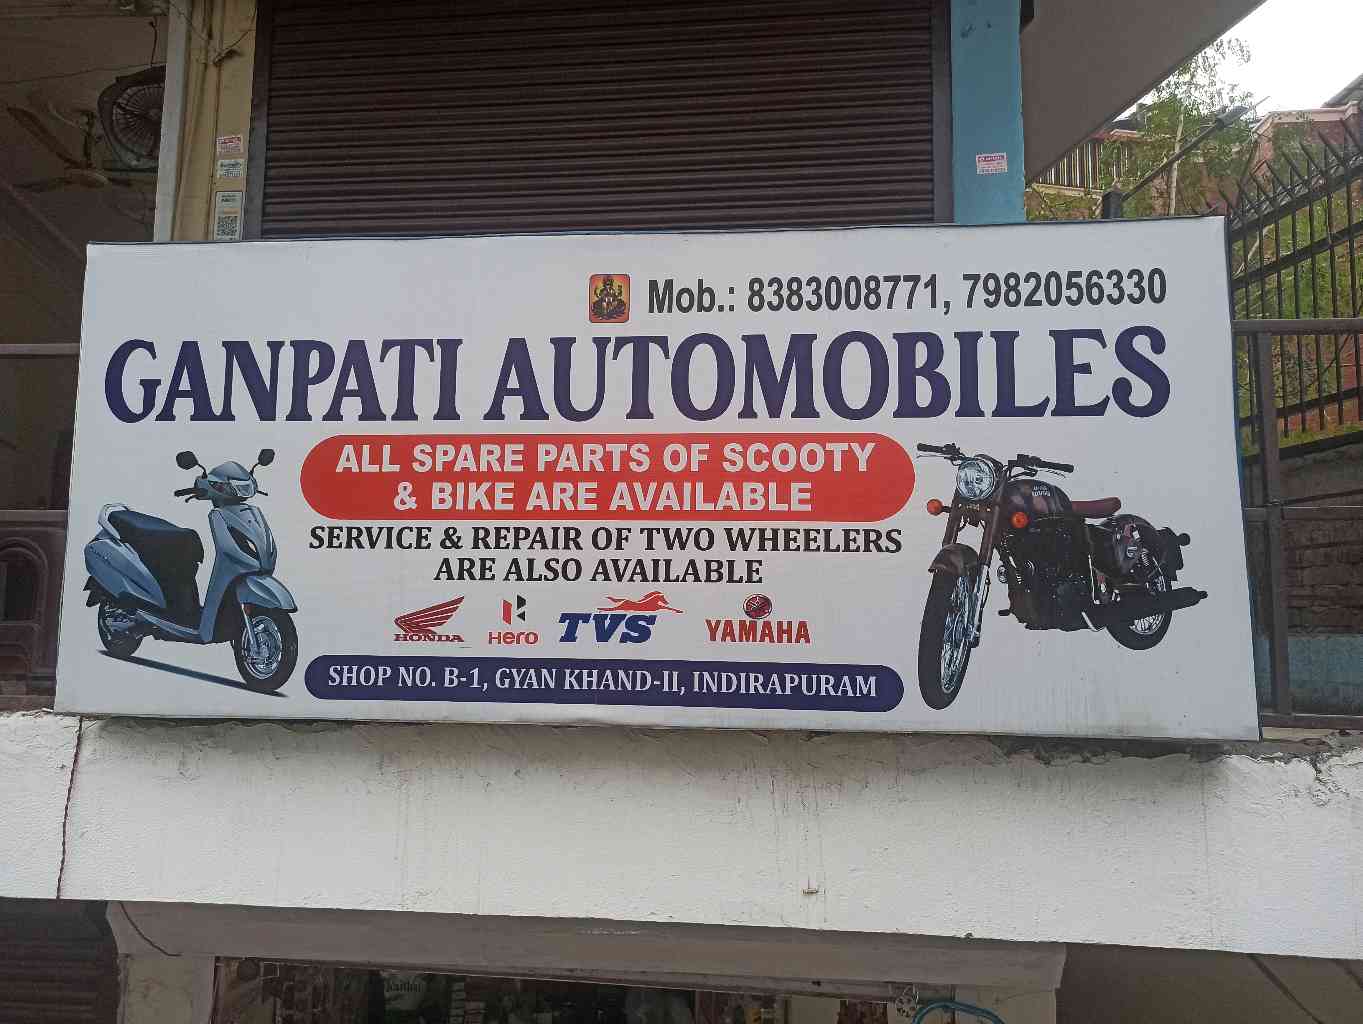 Ganpati Automobiles